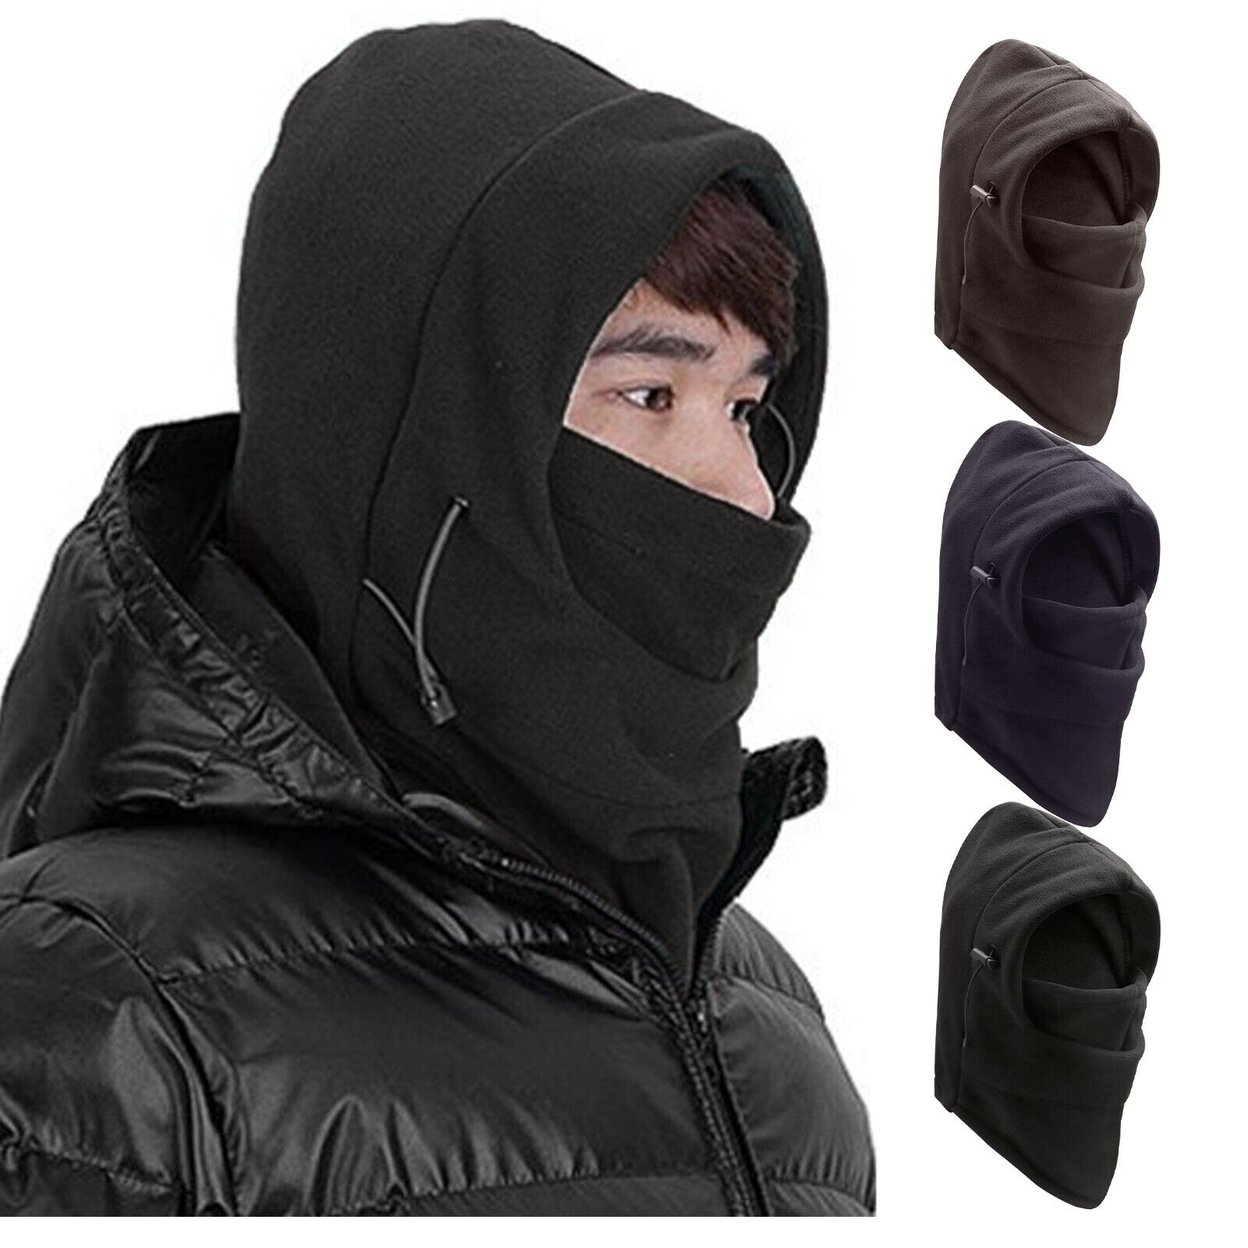 Men's Cozy Ultra Soft Warm Fleece Lined Windproof Balaclava Thermal Ski Face Mask - Grey